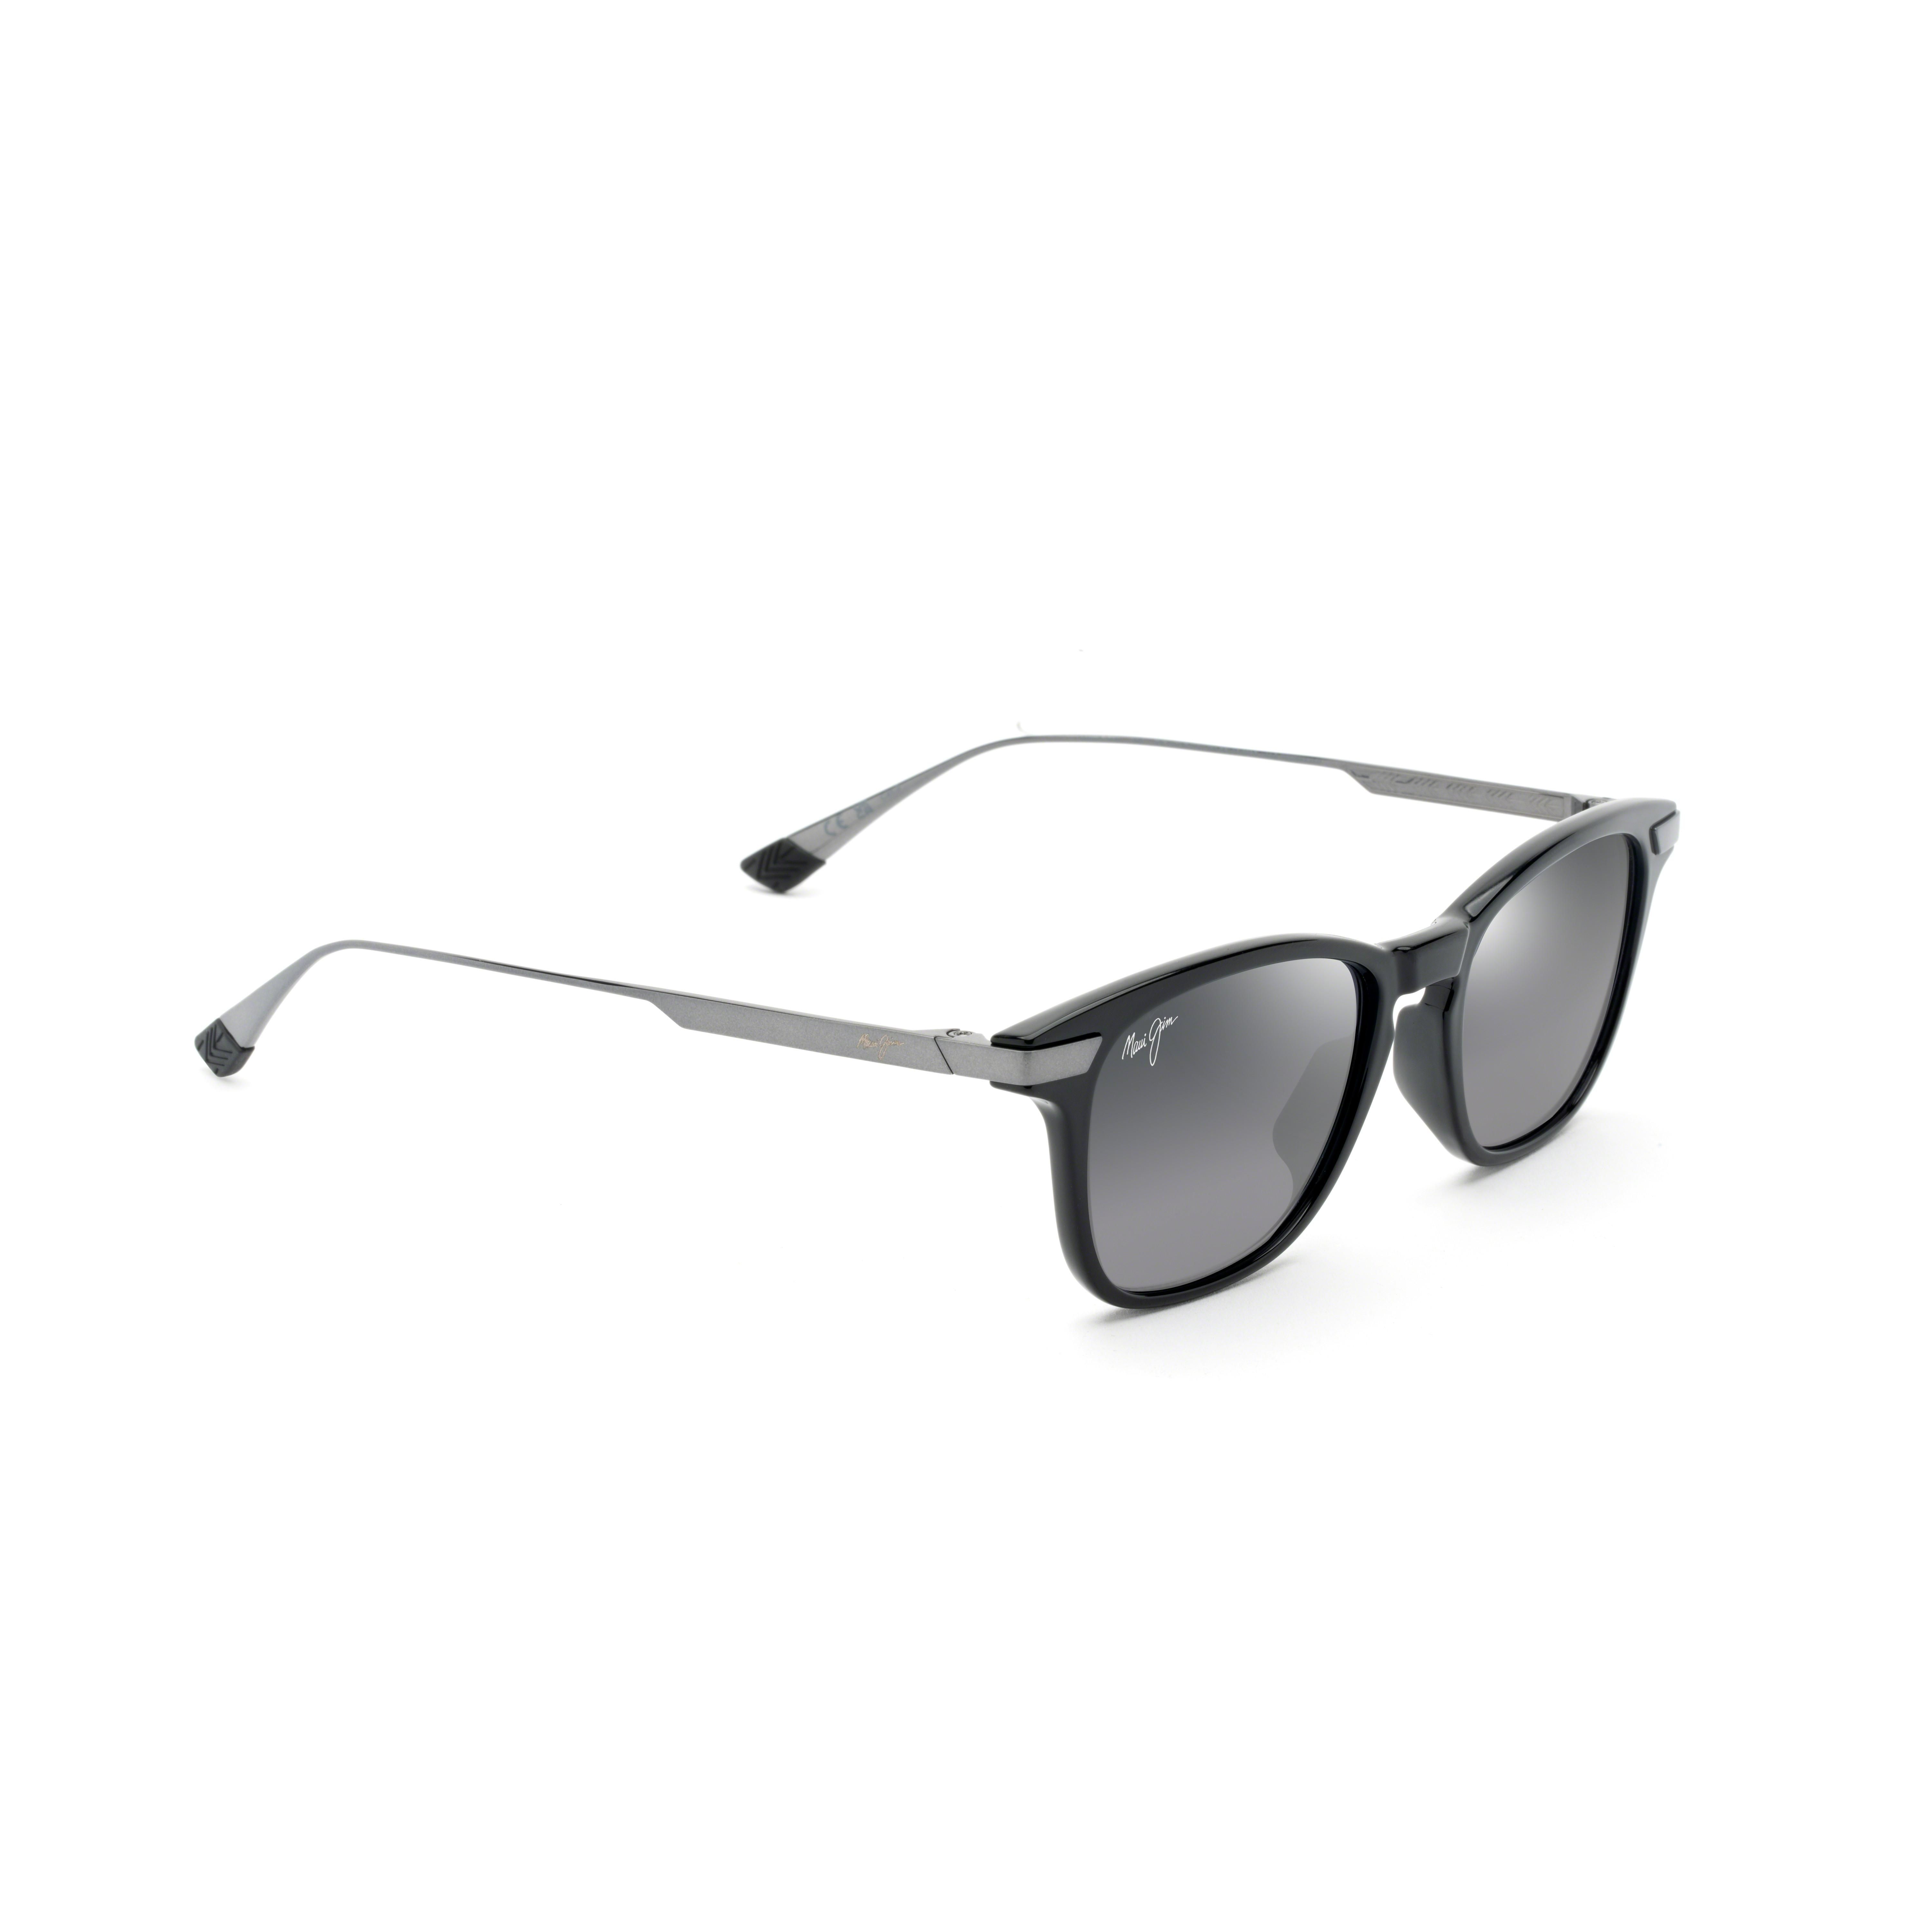 MANAOLANA GS623 Square Sunglasses 02 - size 51